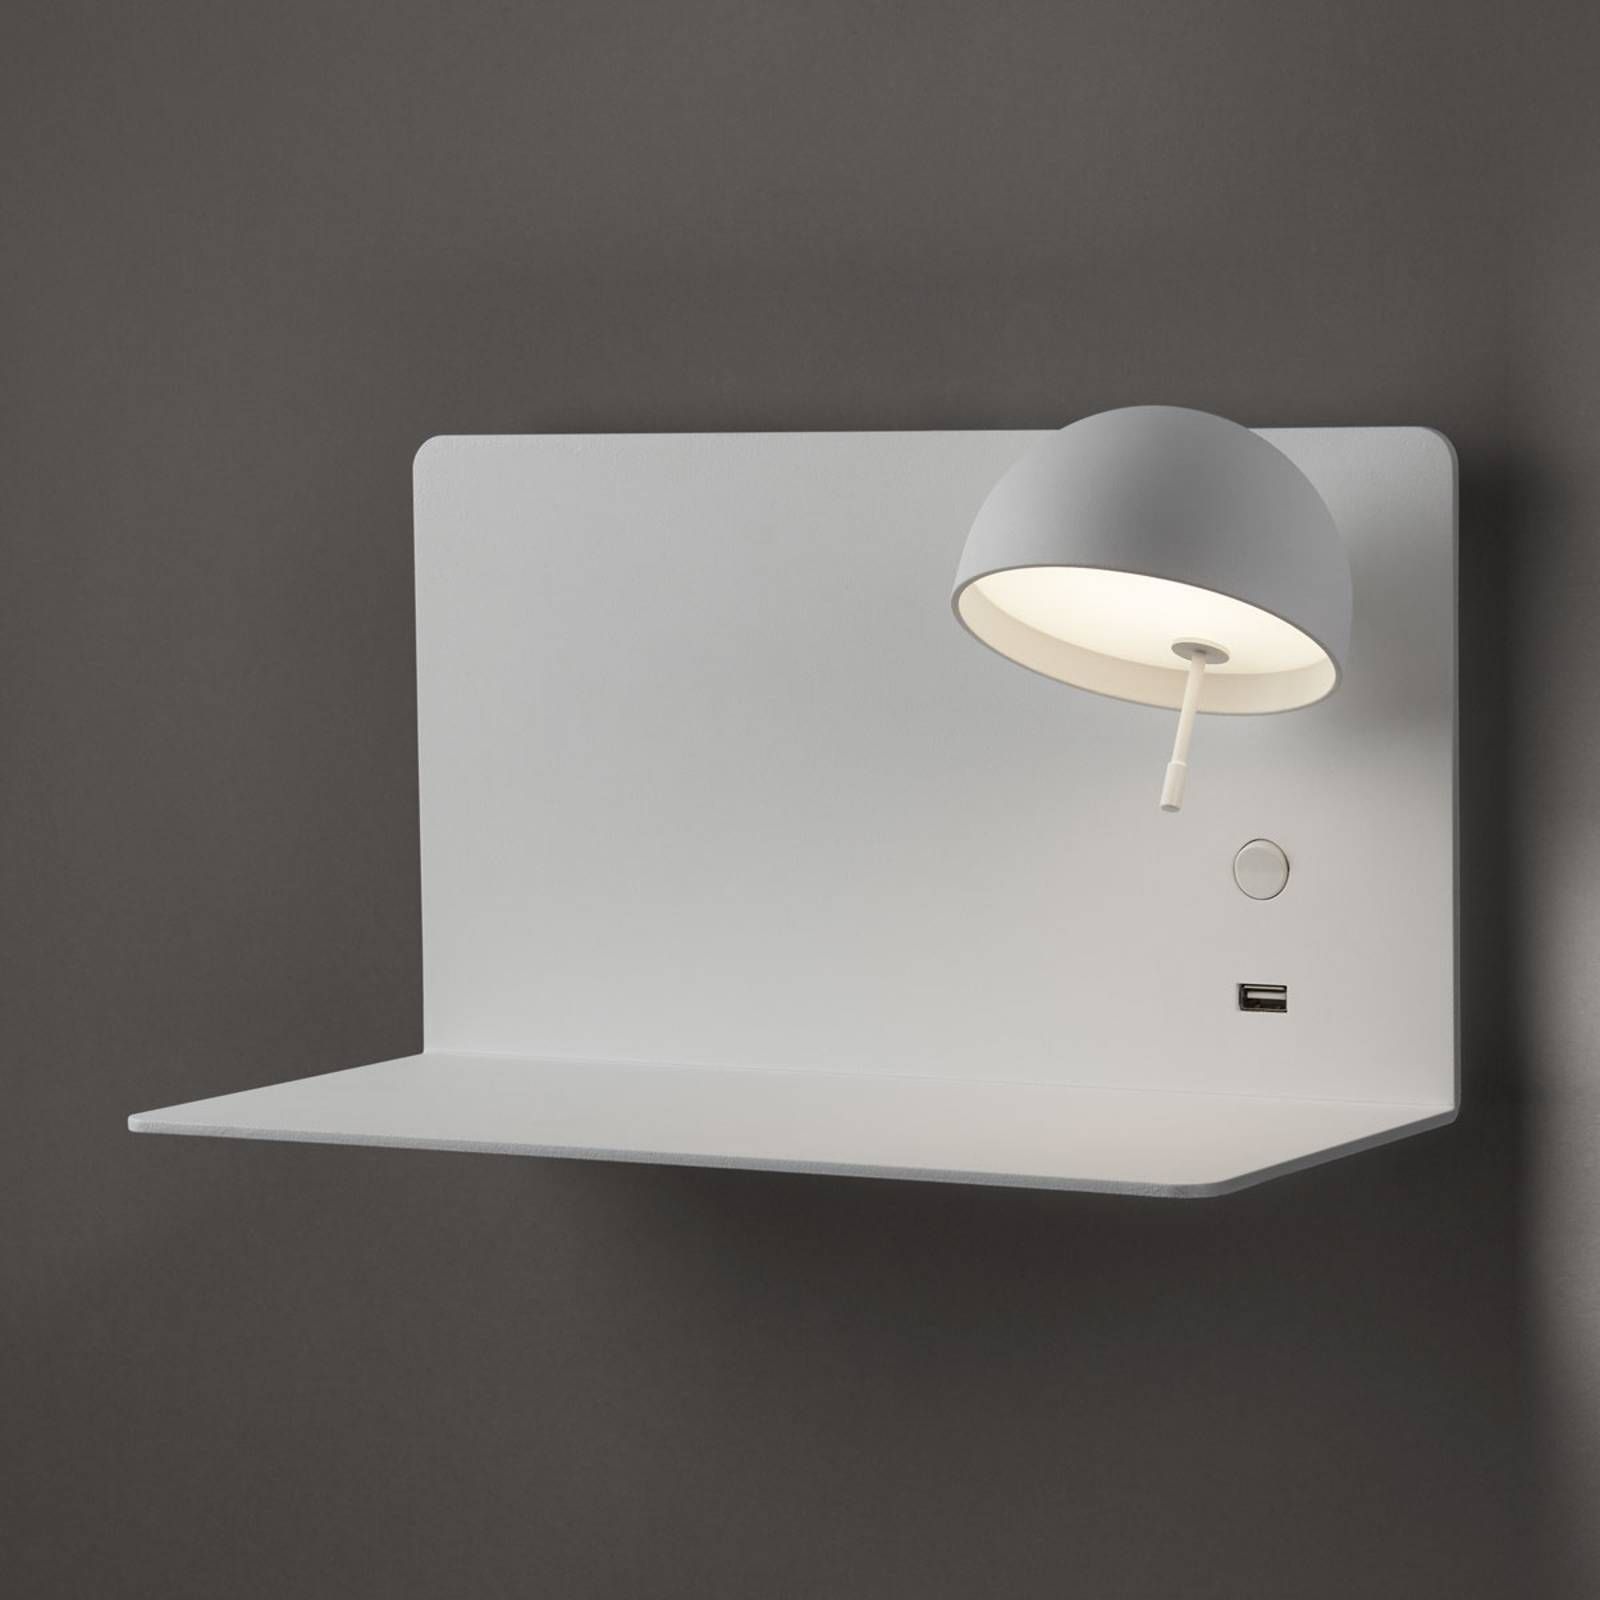 Bover Beddy A/03 nástenné LED biela bodové vpravo, Spálňa, hliník, železo, 4.2W, L: 32 cm, K: 19cm